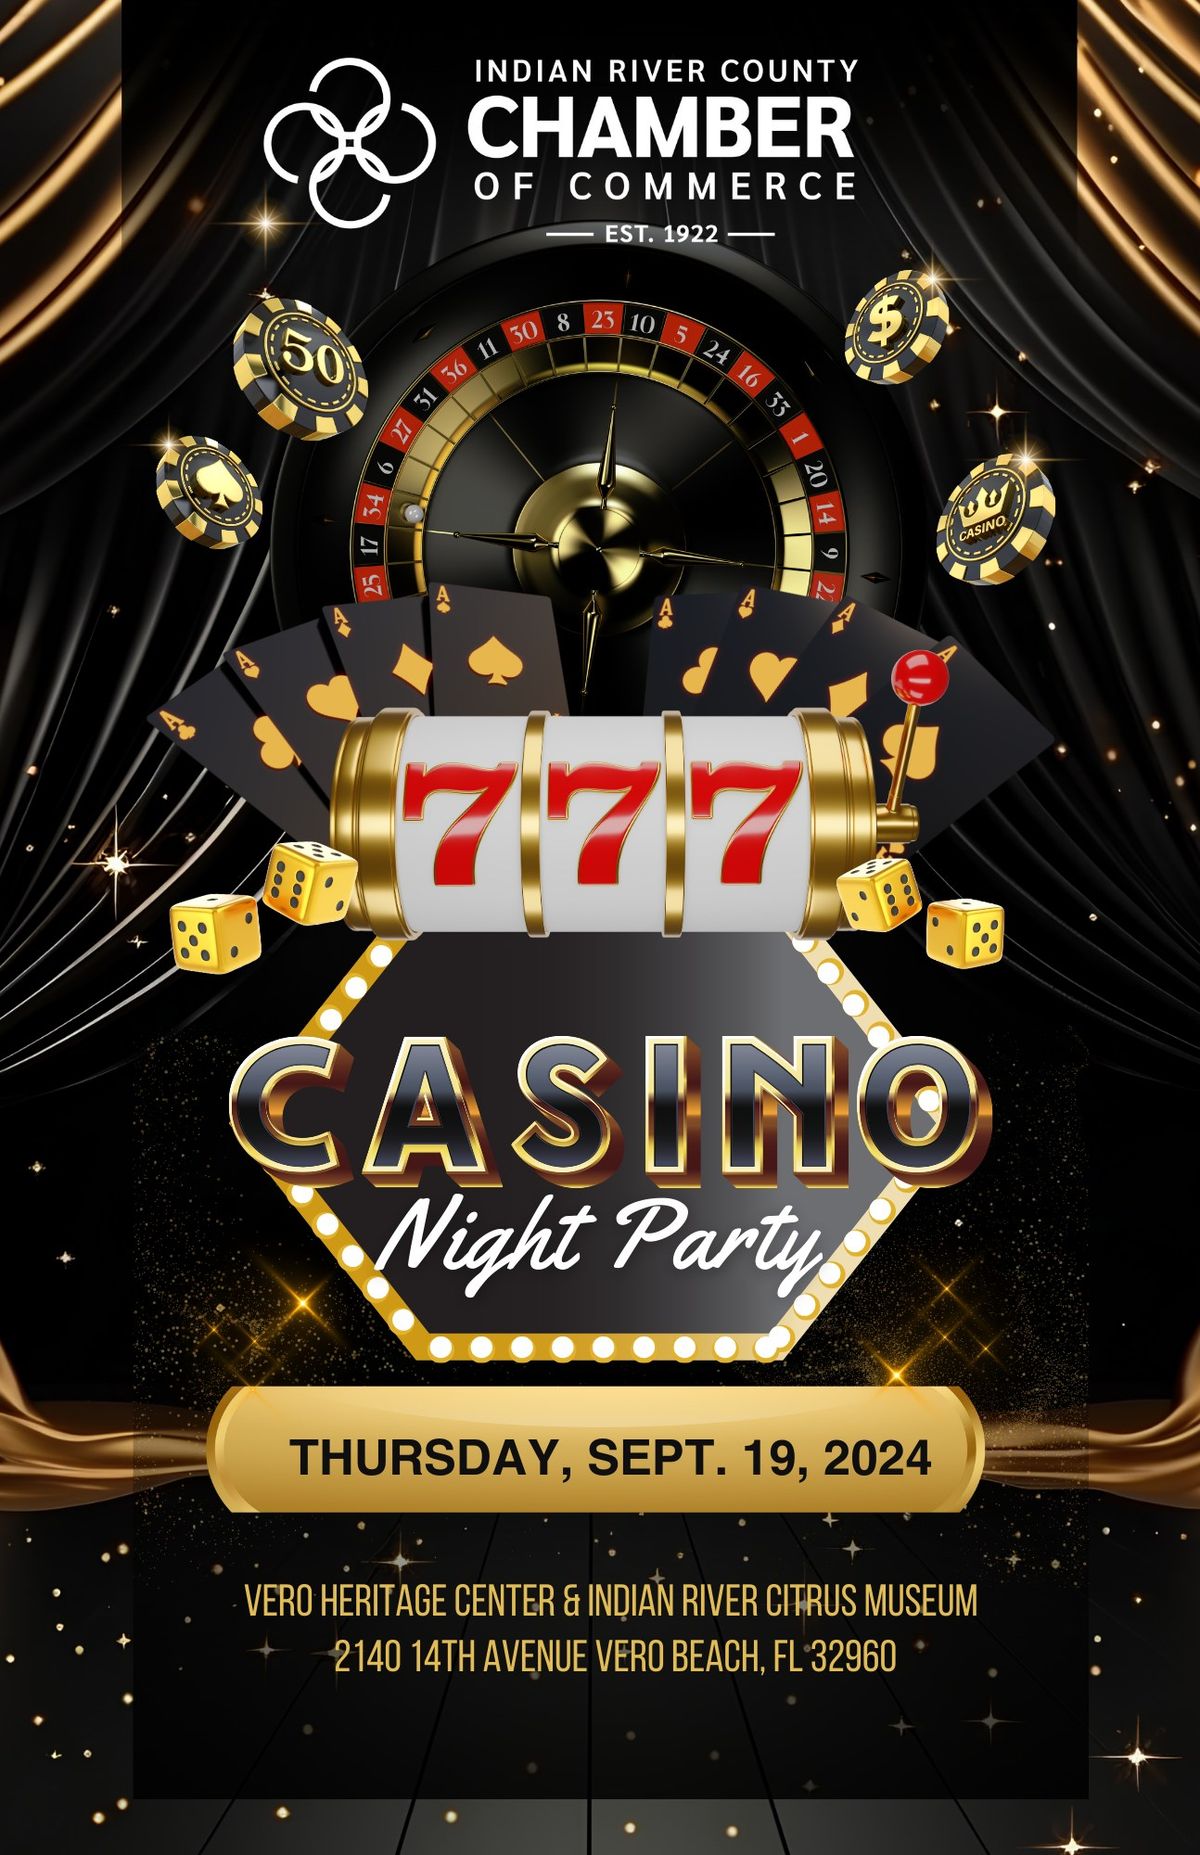 Casino Night Party!